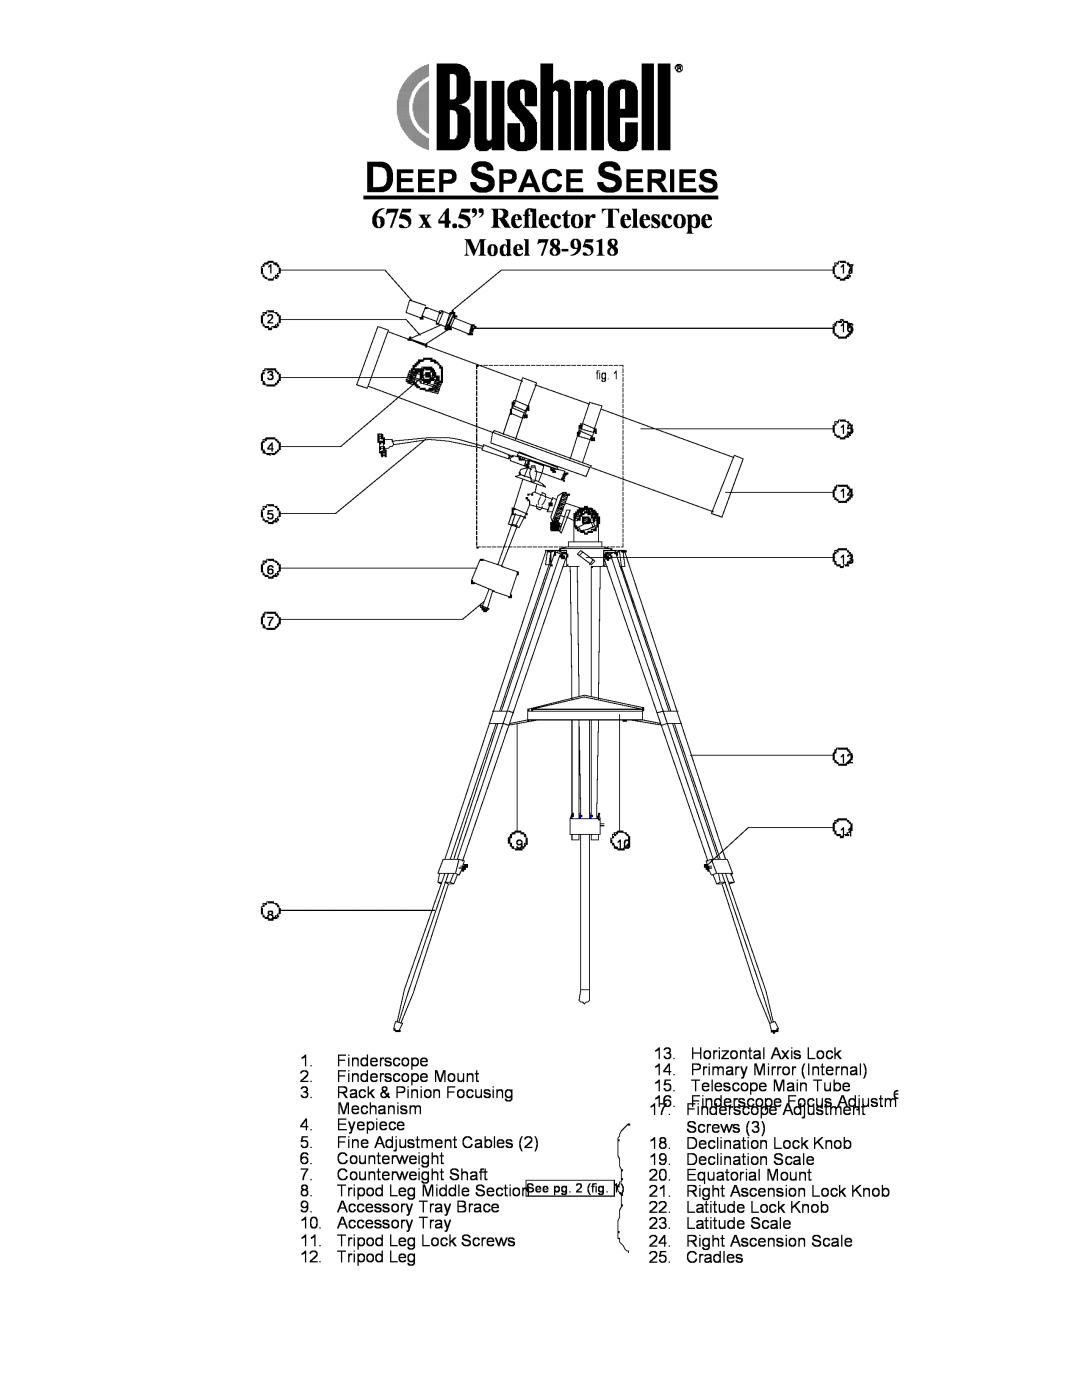 Bushnell 78-9518 manual 675 x 4.5” Reflector Telescope, Deep Space Series, Model 